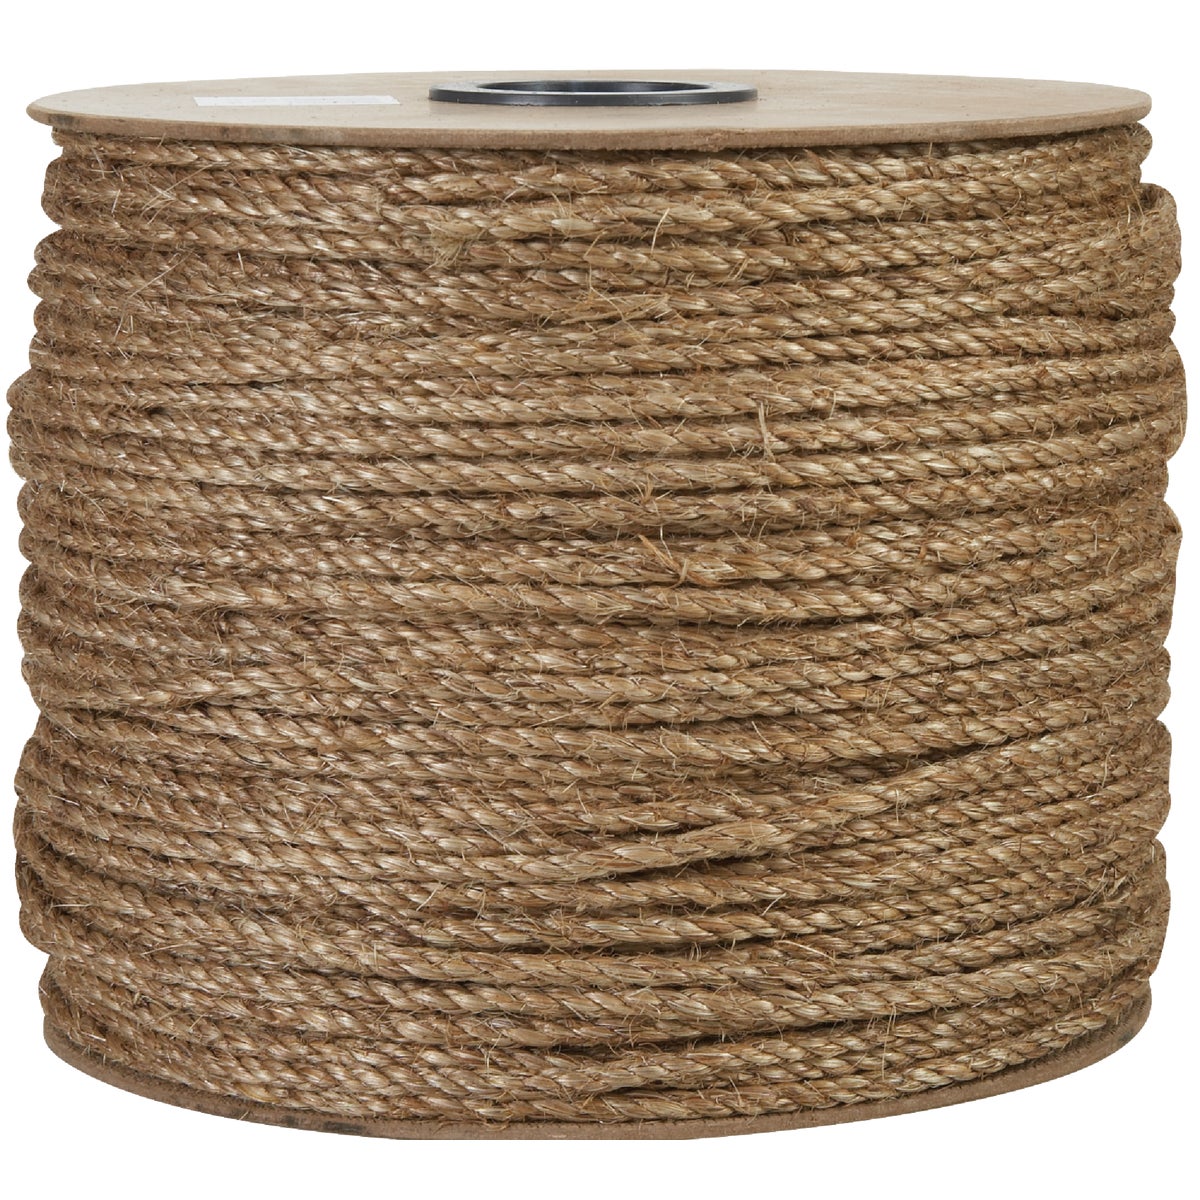 Item 708470, Manila rope made of natural manila fiber.